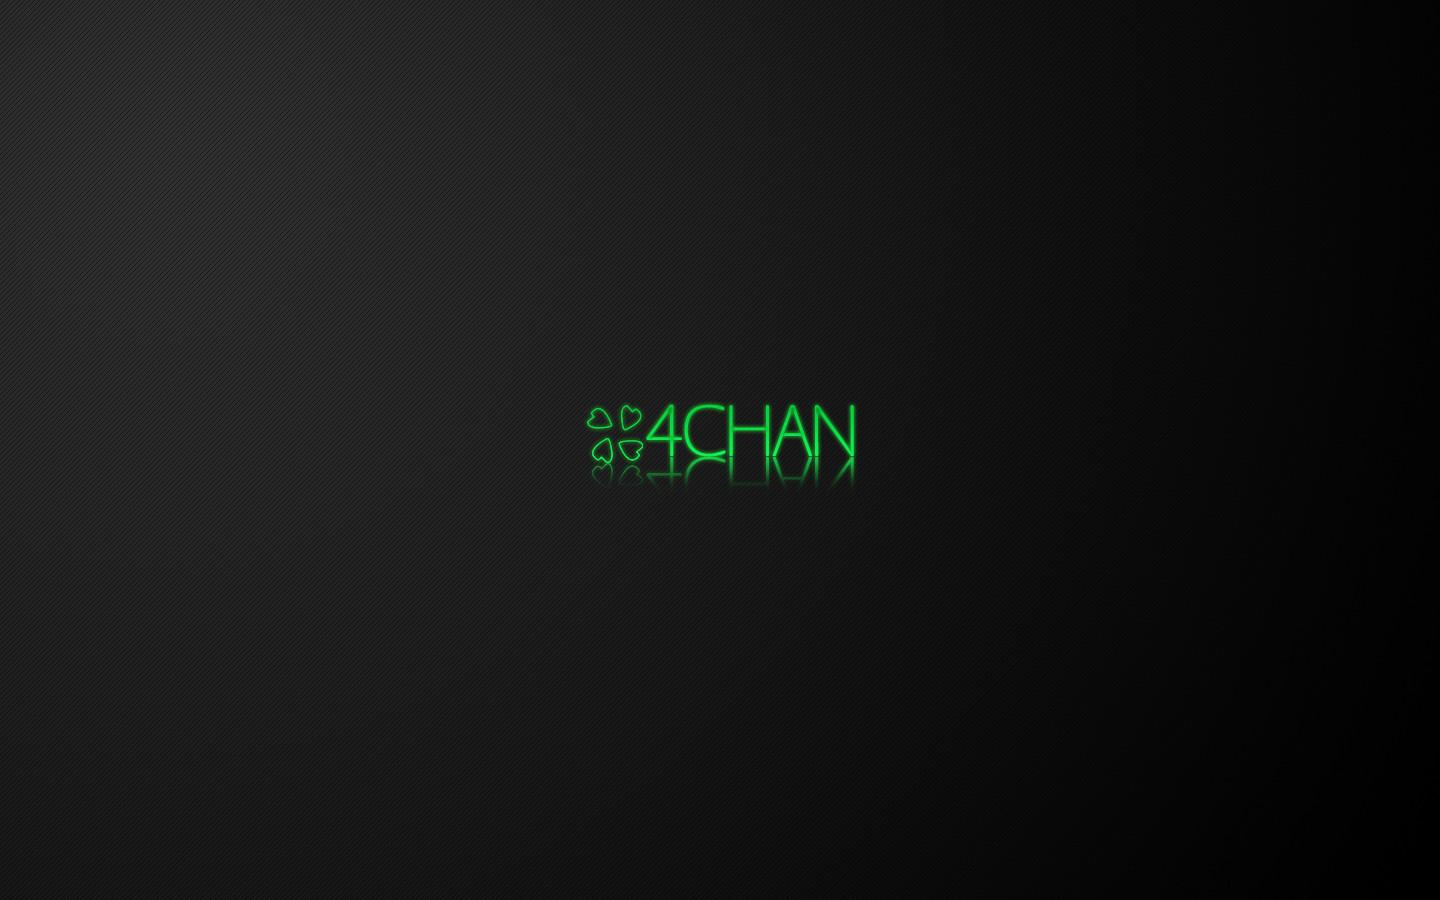 4chan Wallpaper 1440×900 | HD Wallpapers Range